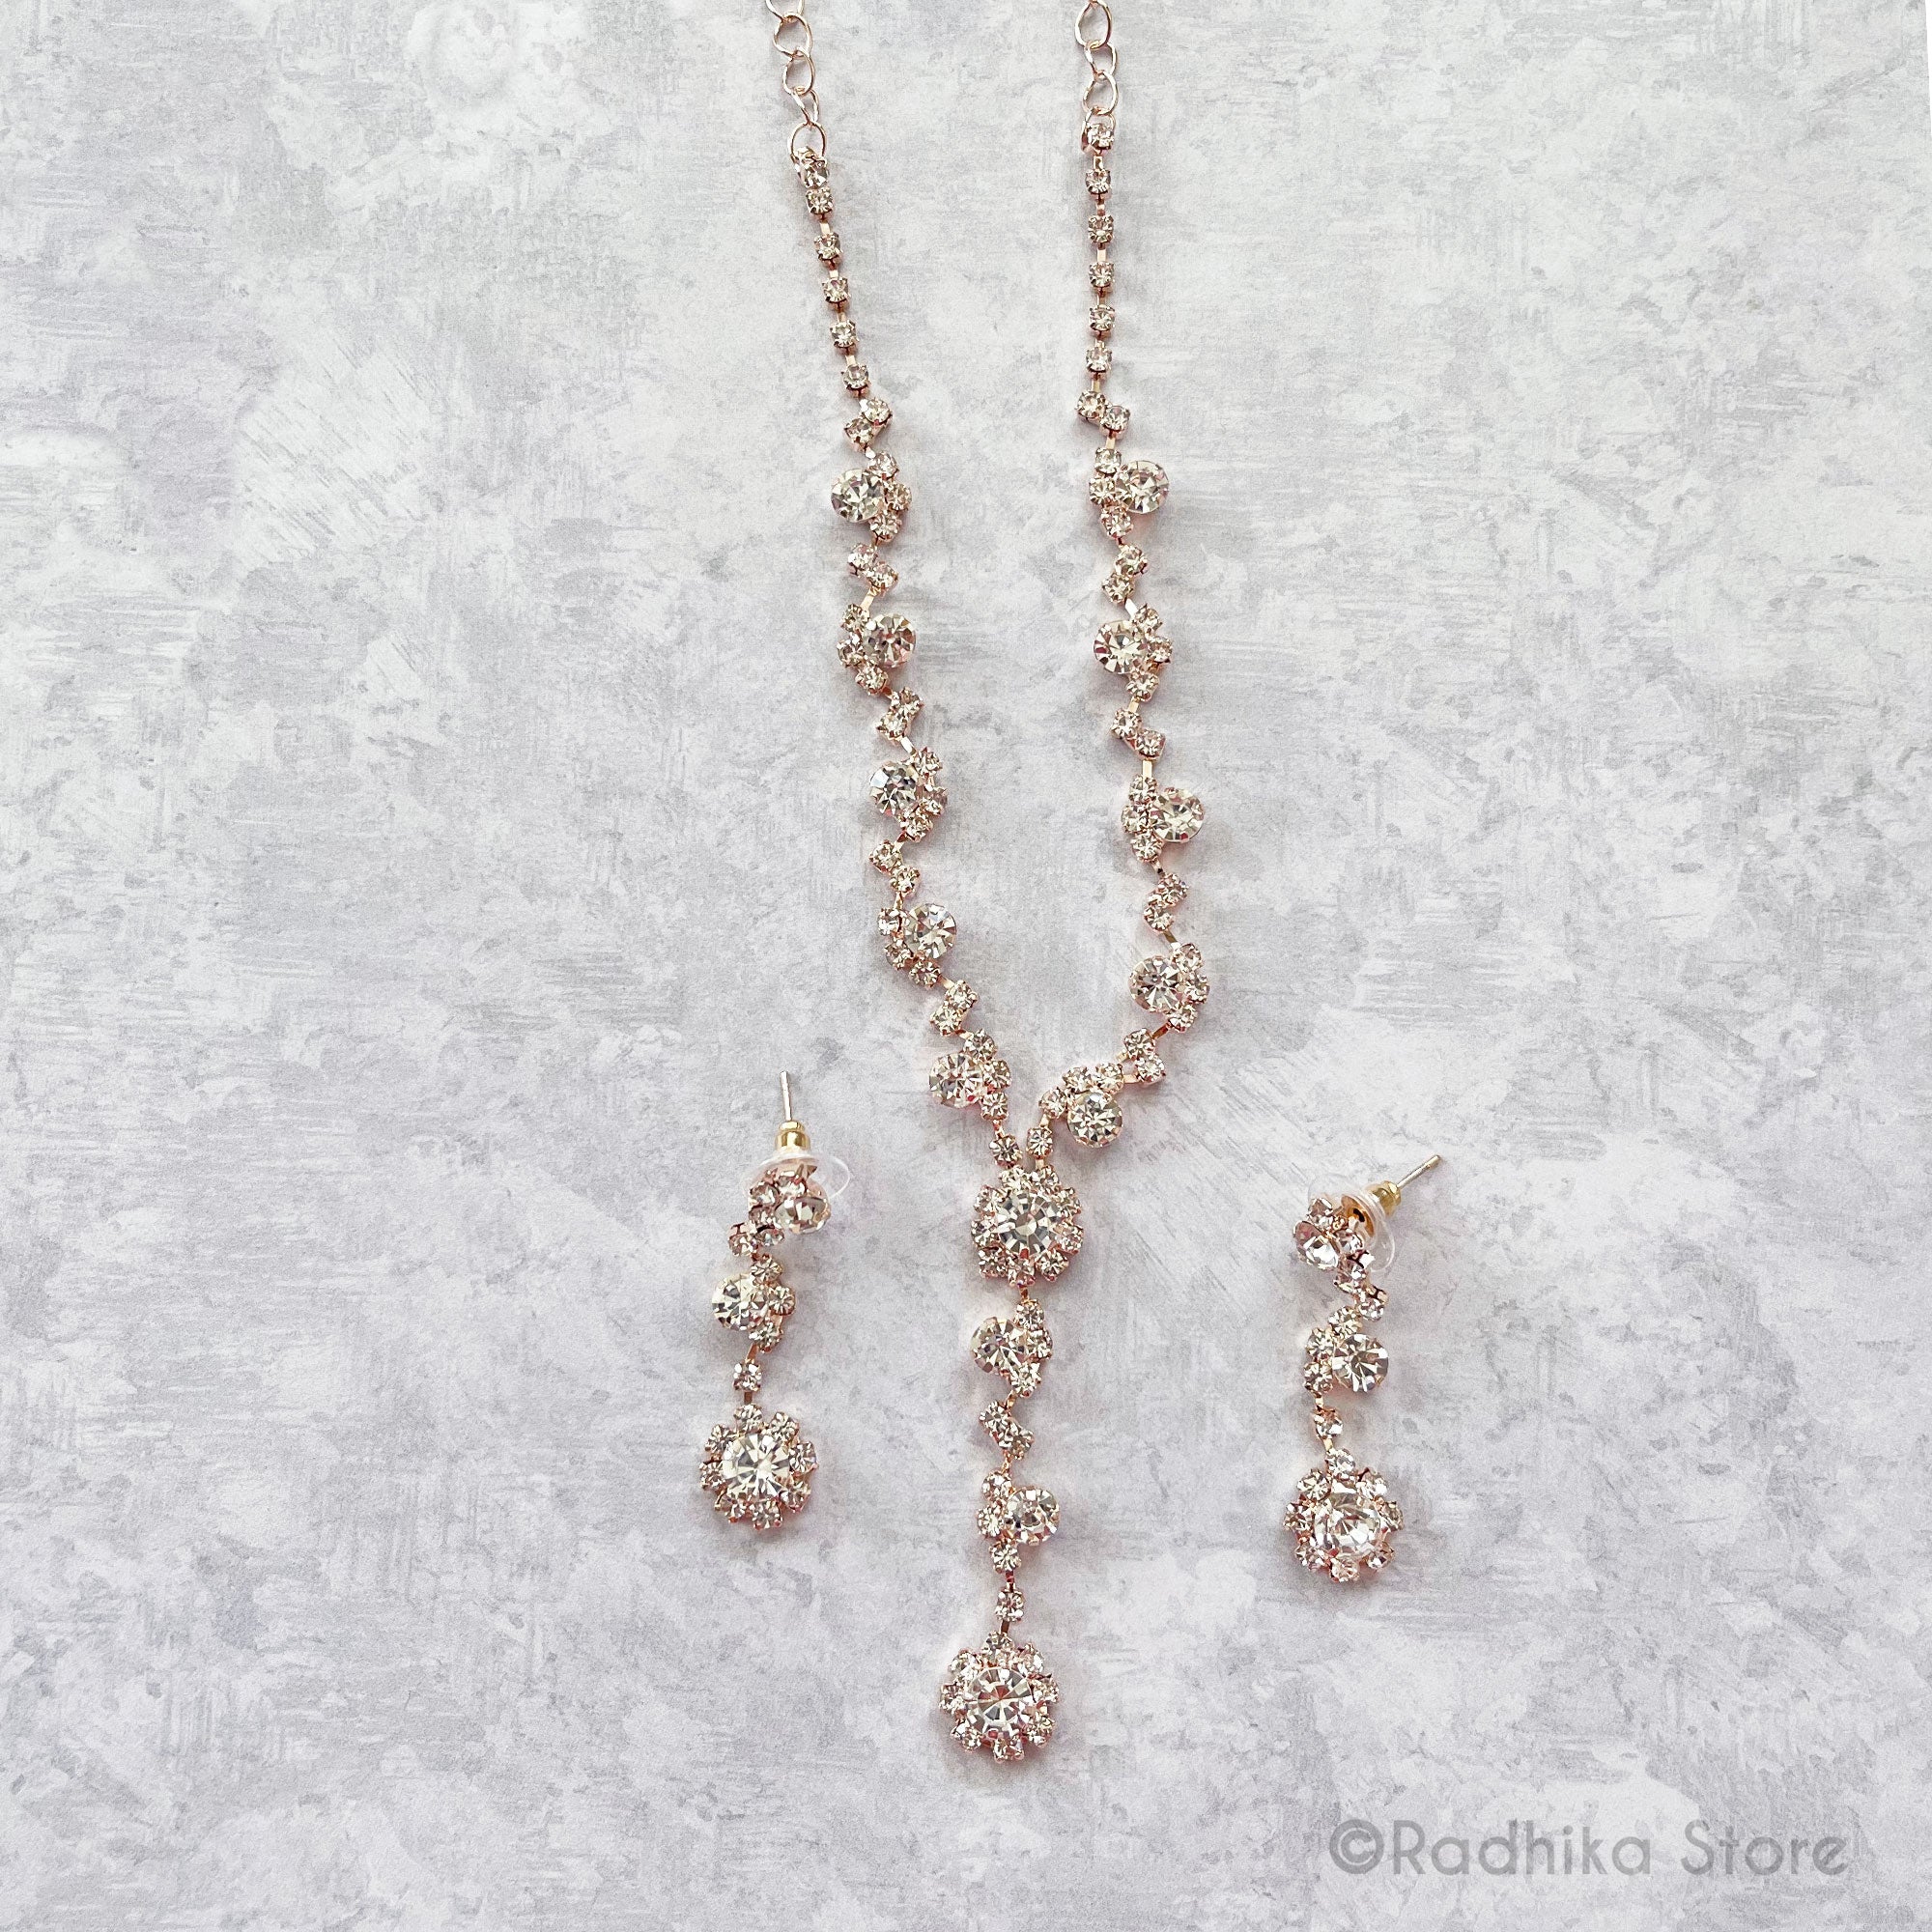 Vrindavan Flower Drops - Rhinestone Deity Necklace And Earring Set